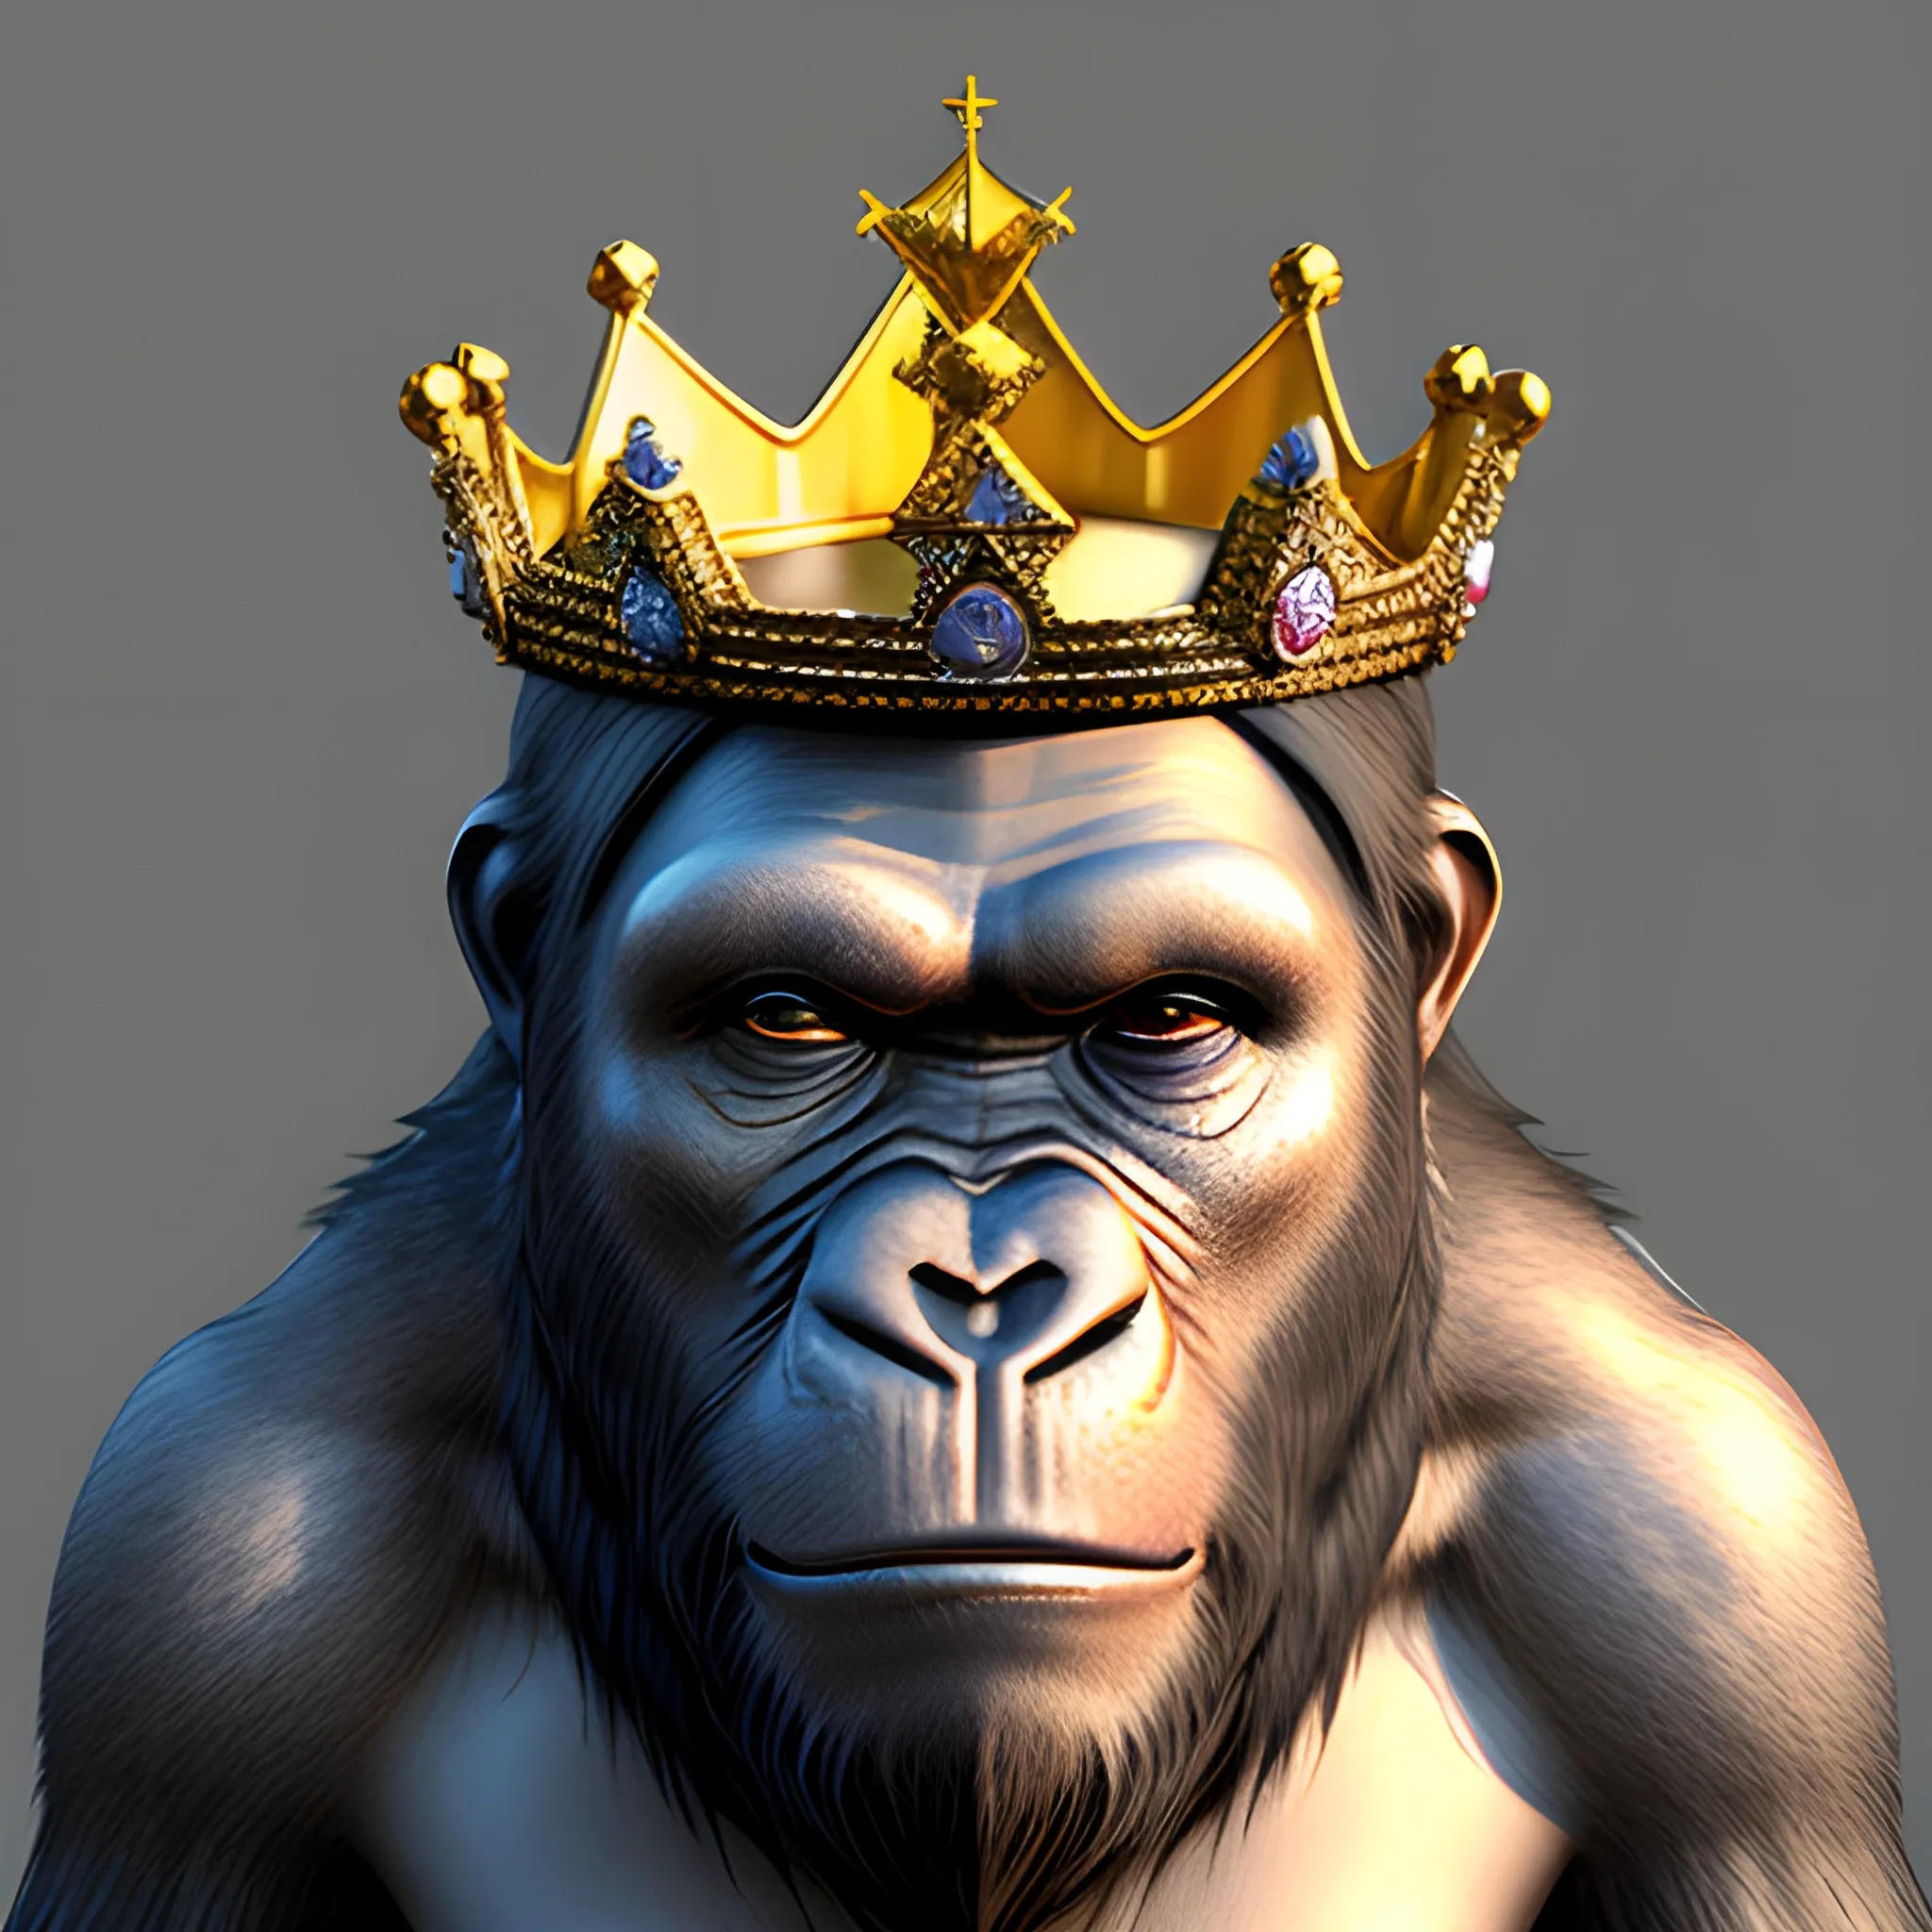 apes wearing crown, 3D